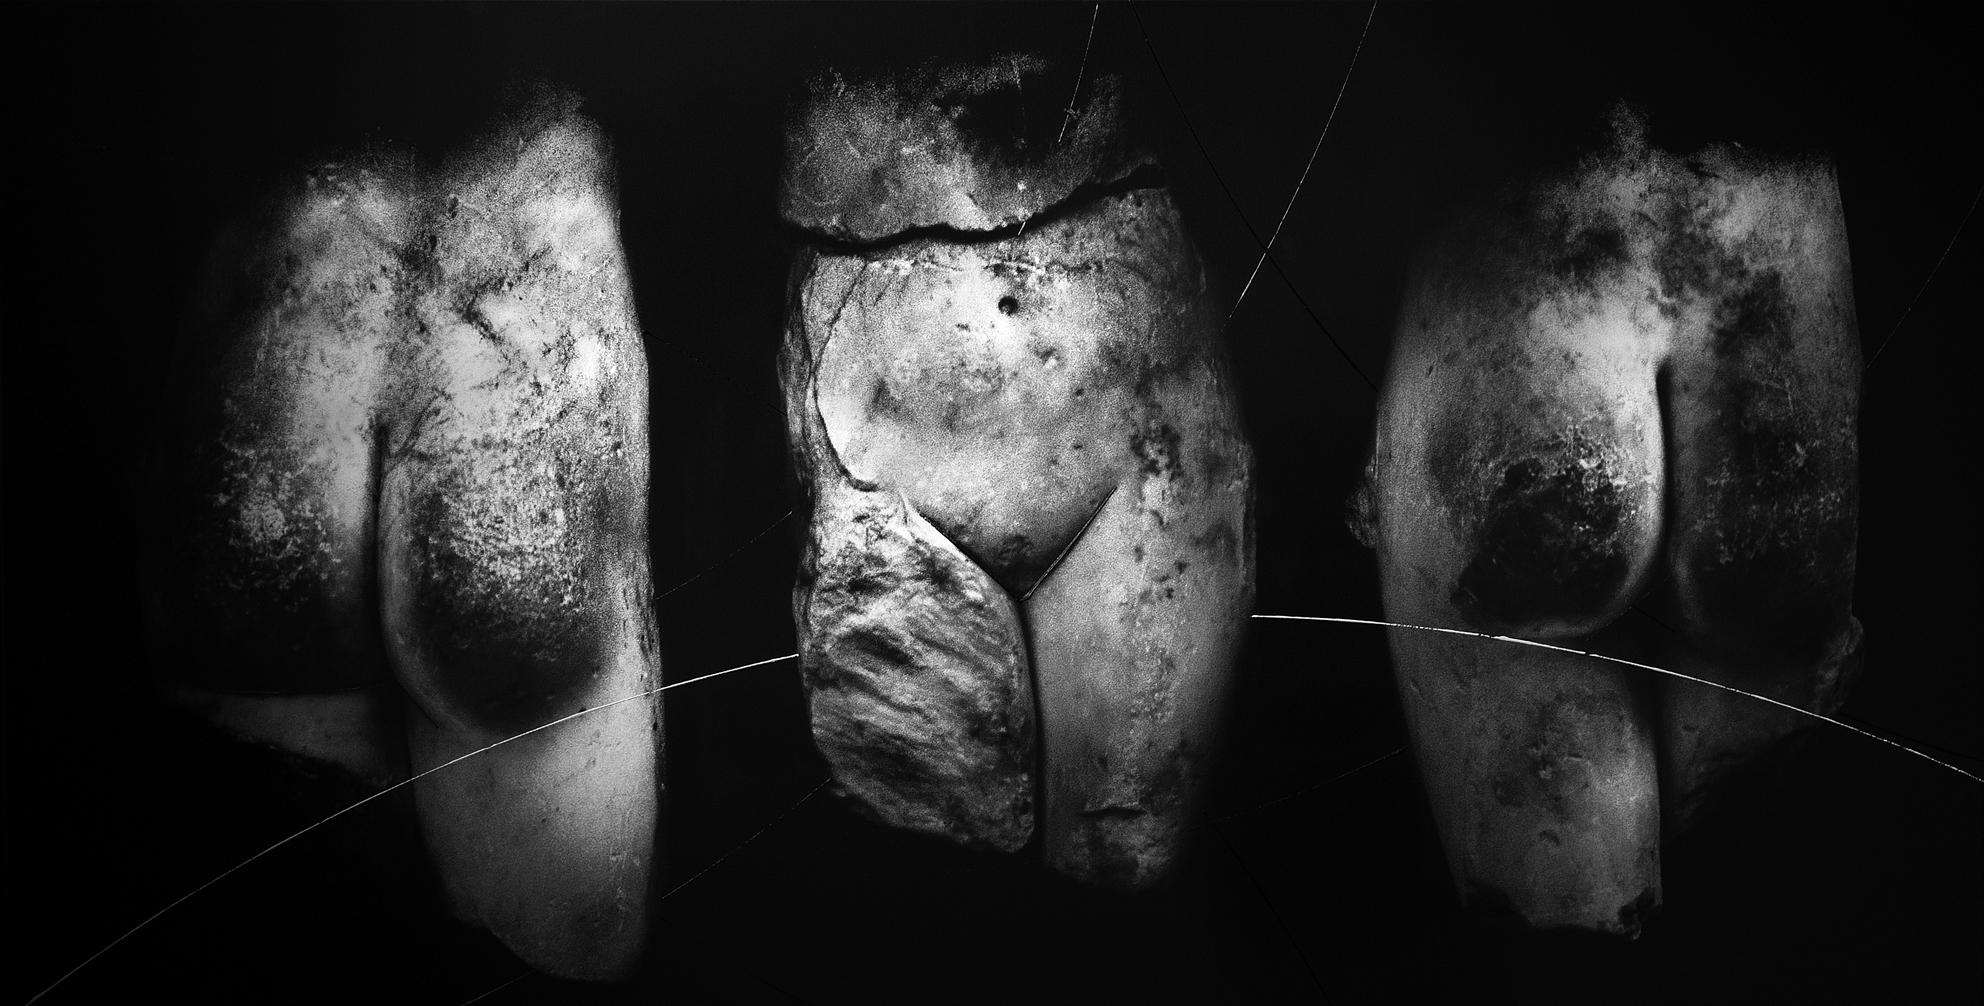 Kamil Fırat Nude Photograph – Serie Stone Faces aus Stein